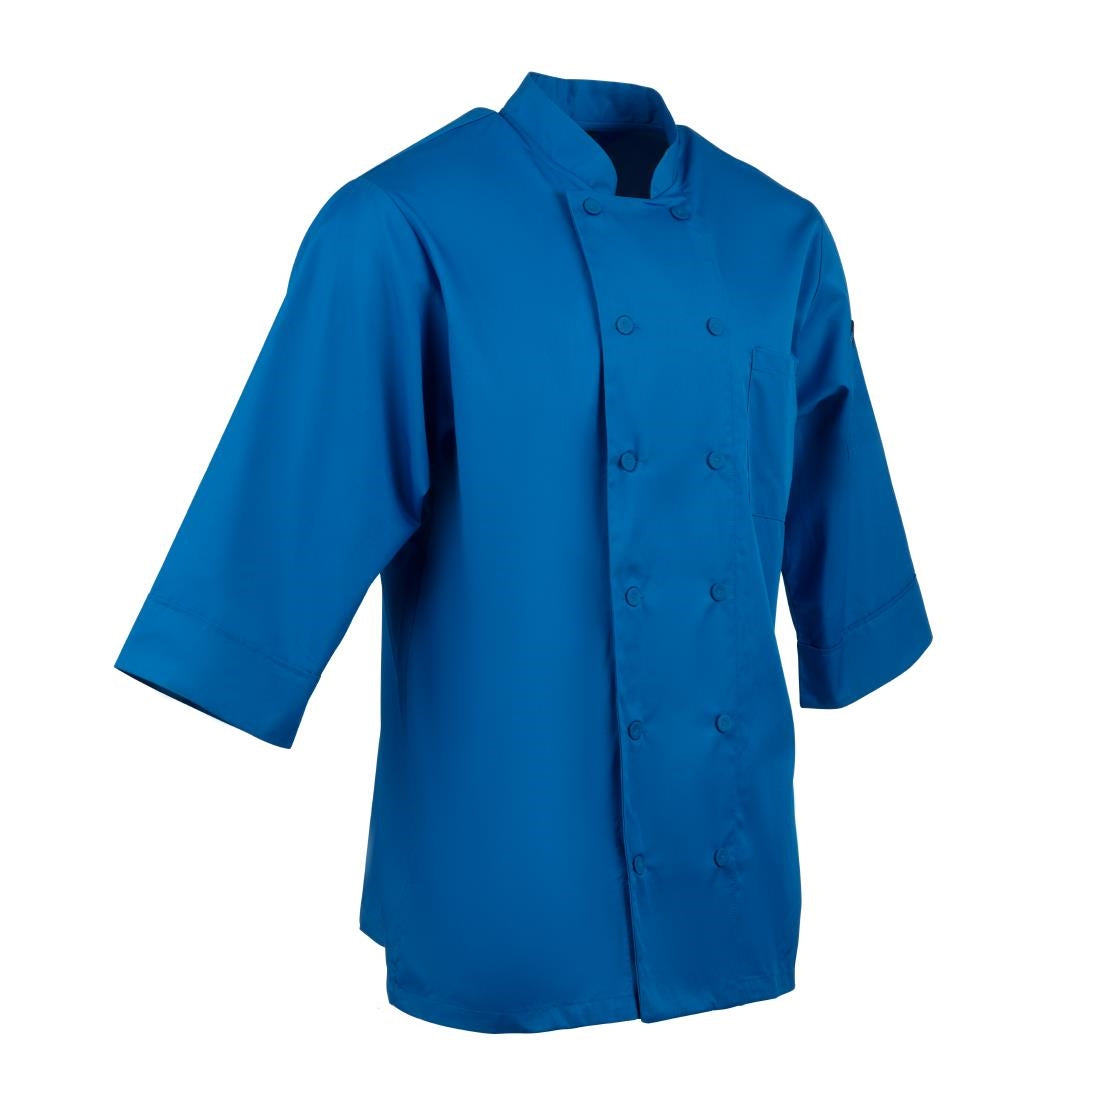 B178-L Chef Works Unisex Chefs Jacket Blue L JD Catering Equipment Solutions Ltd